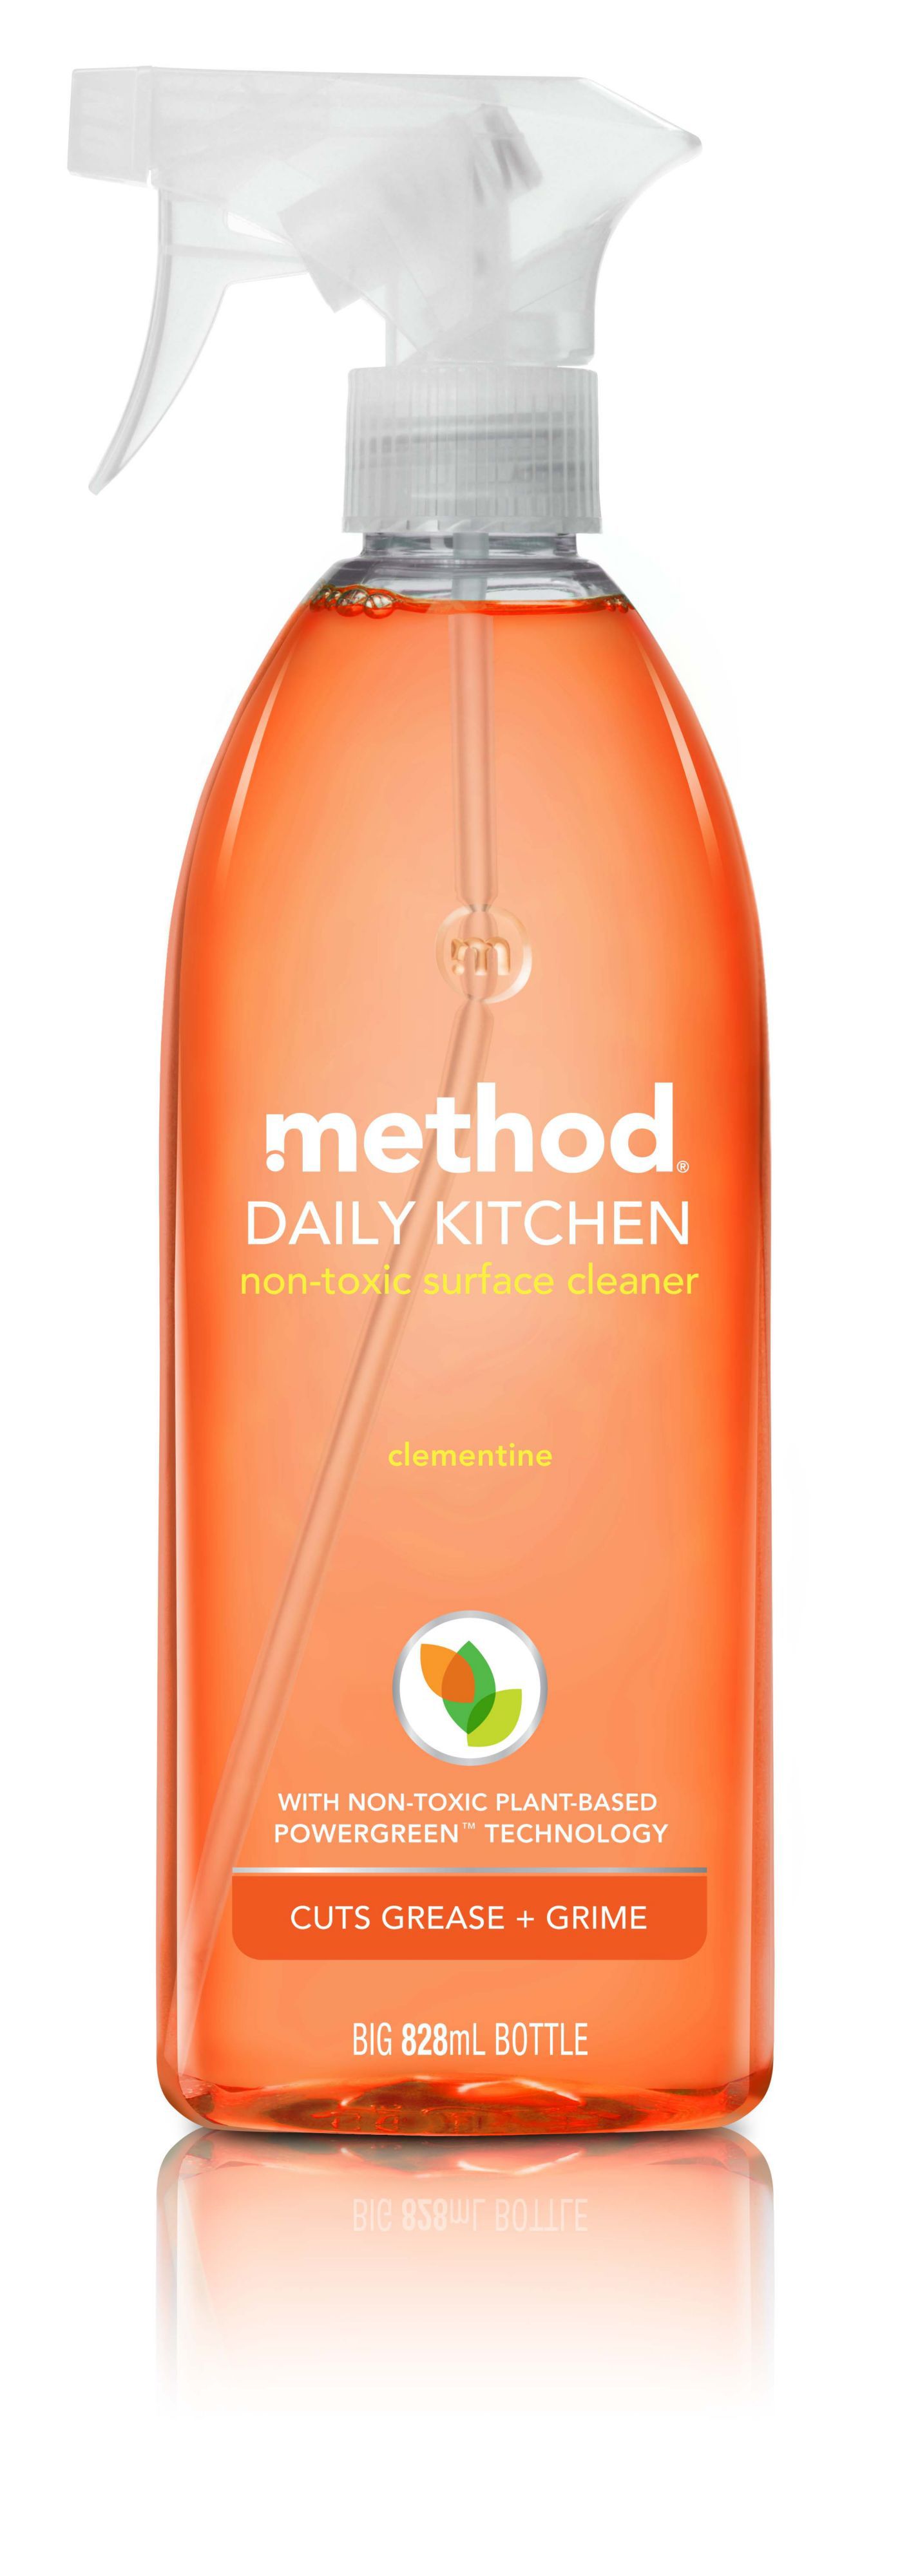 Method Daily Kitchen cleaner Spray, 828 ml | Departments | DIY at B&Q